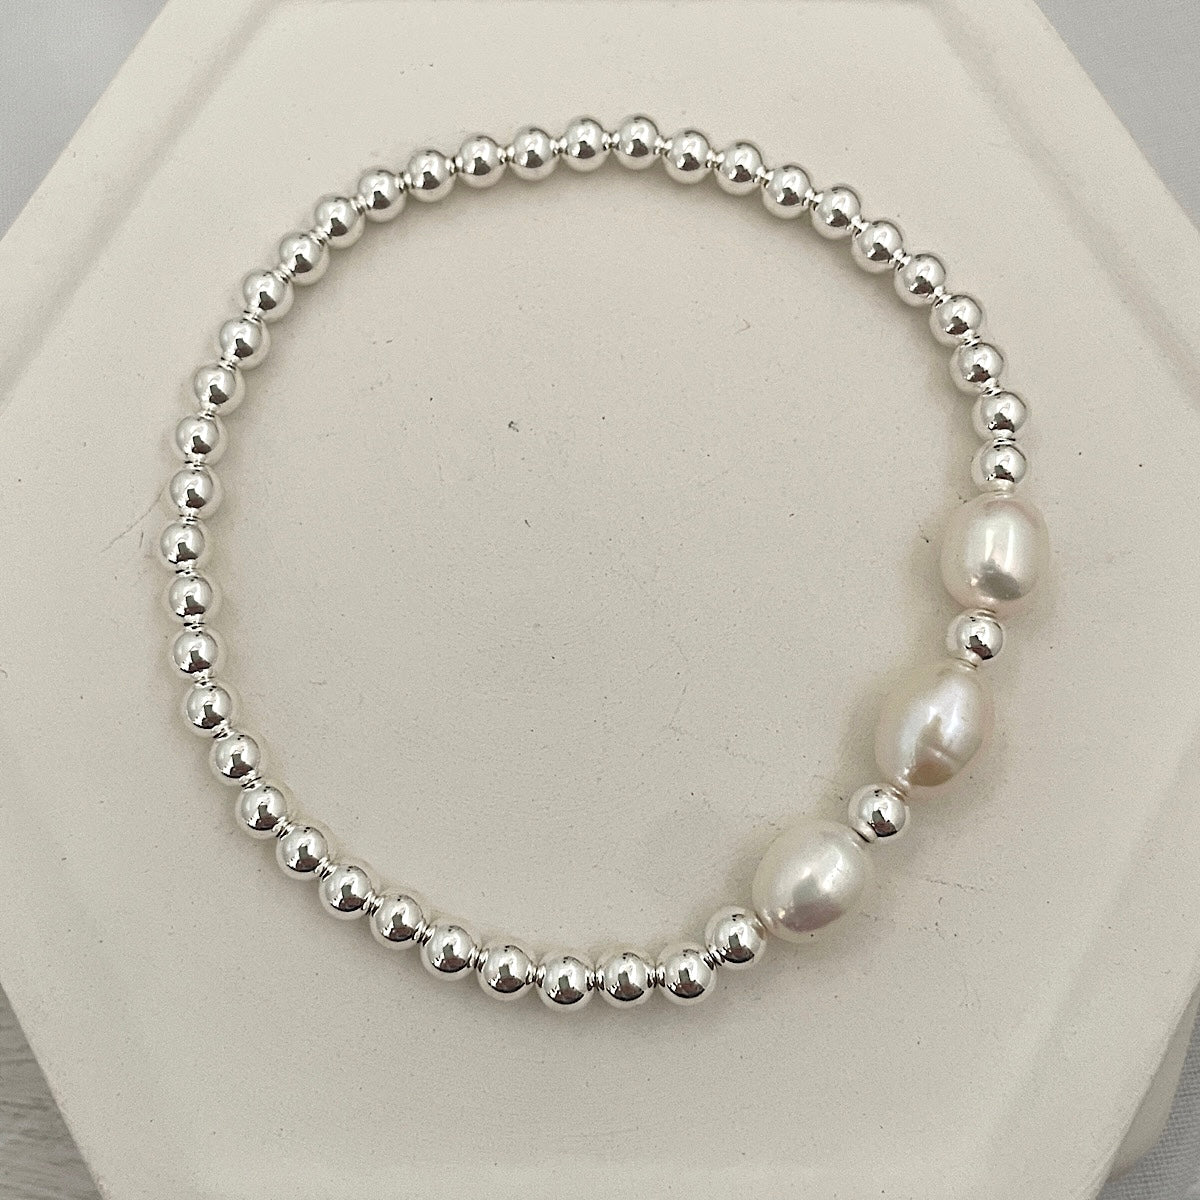 3 Baroque Pearl Bead Bracelet Sterling Silver